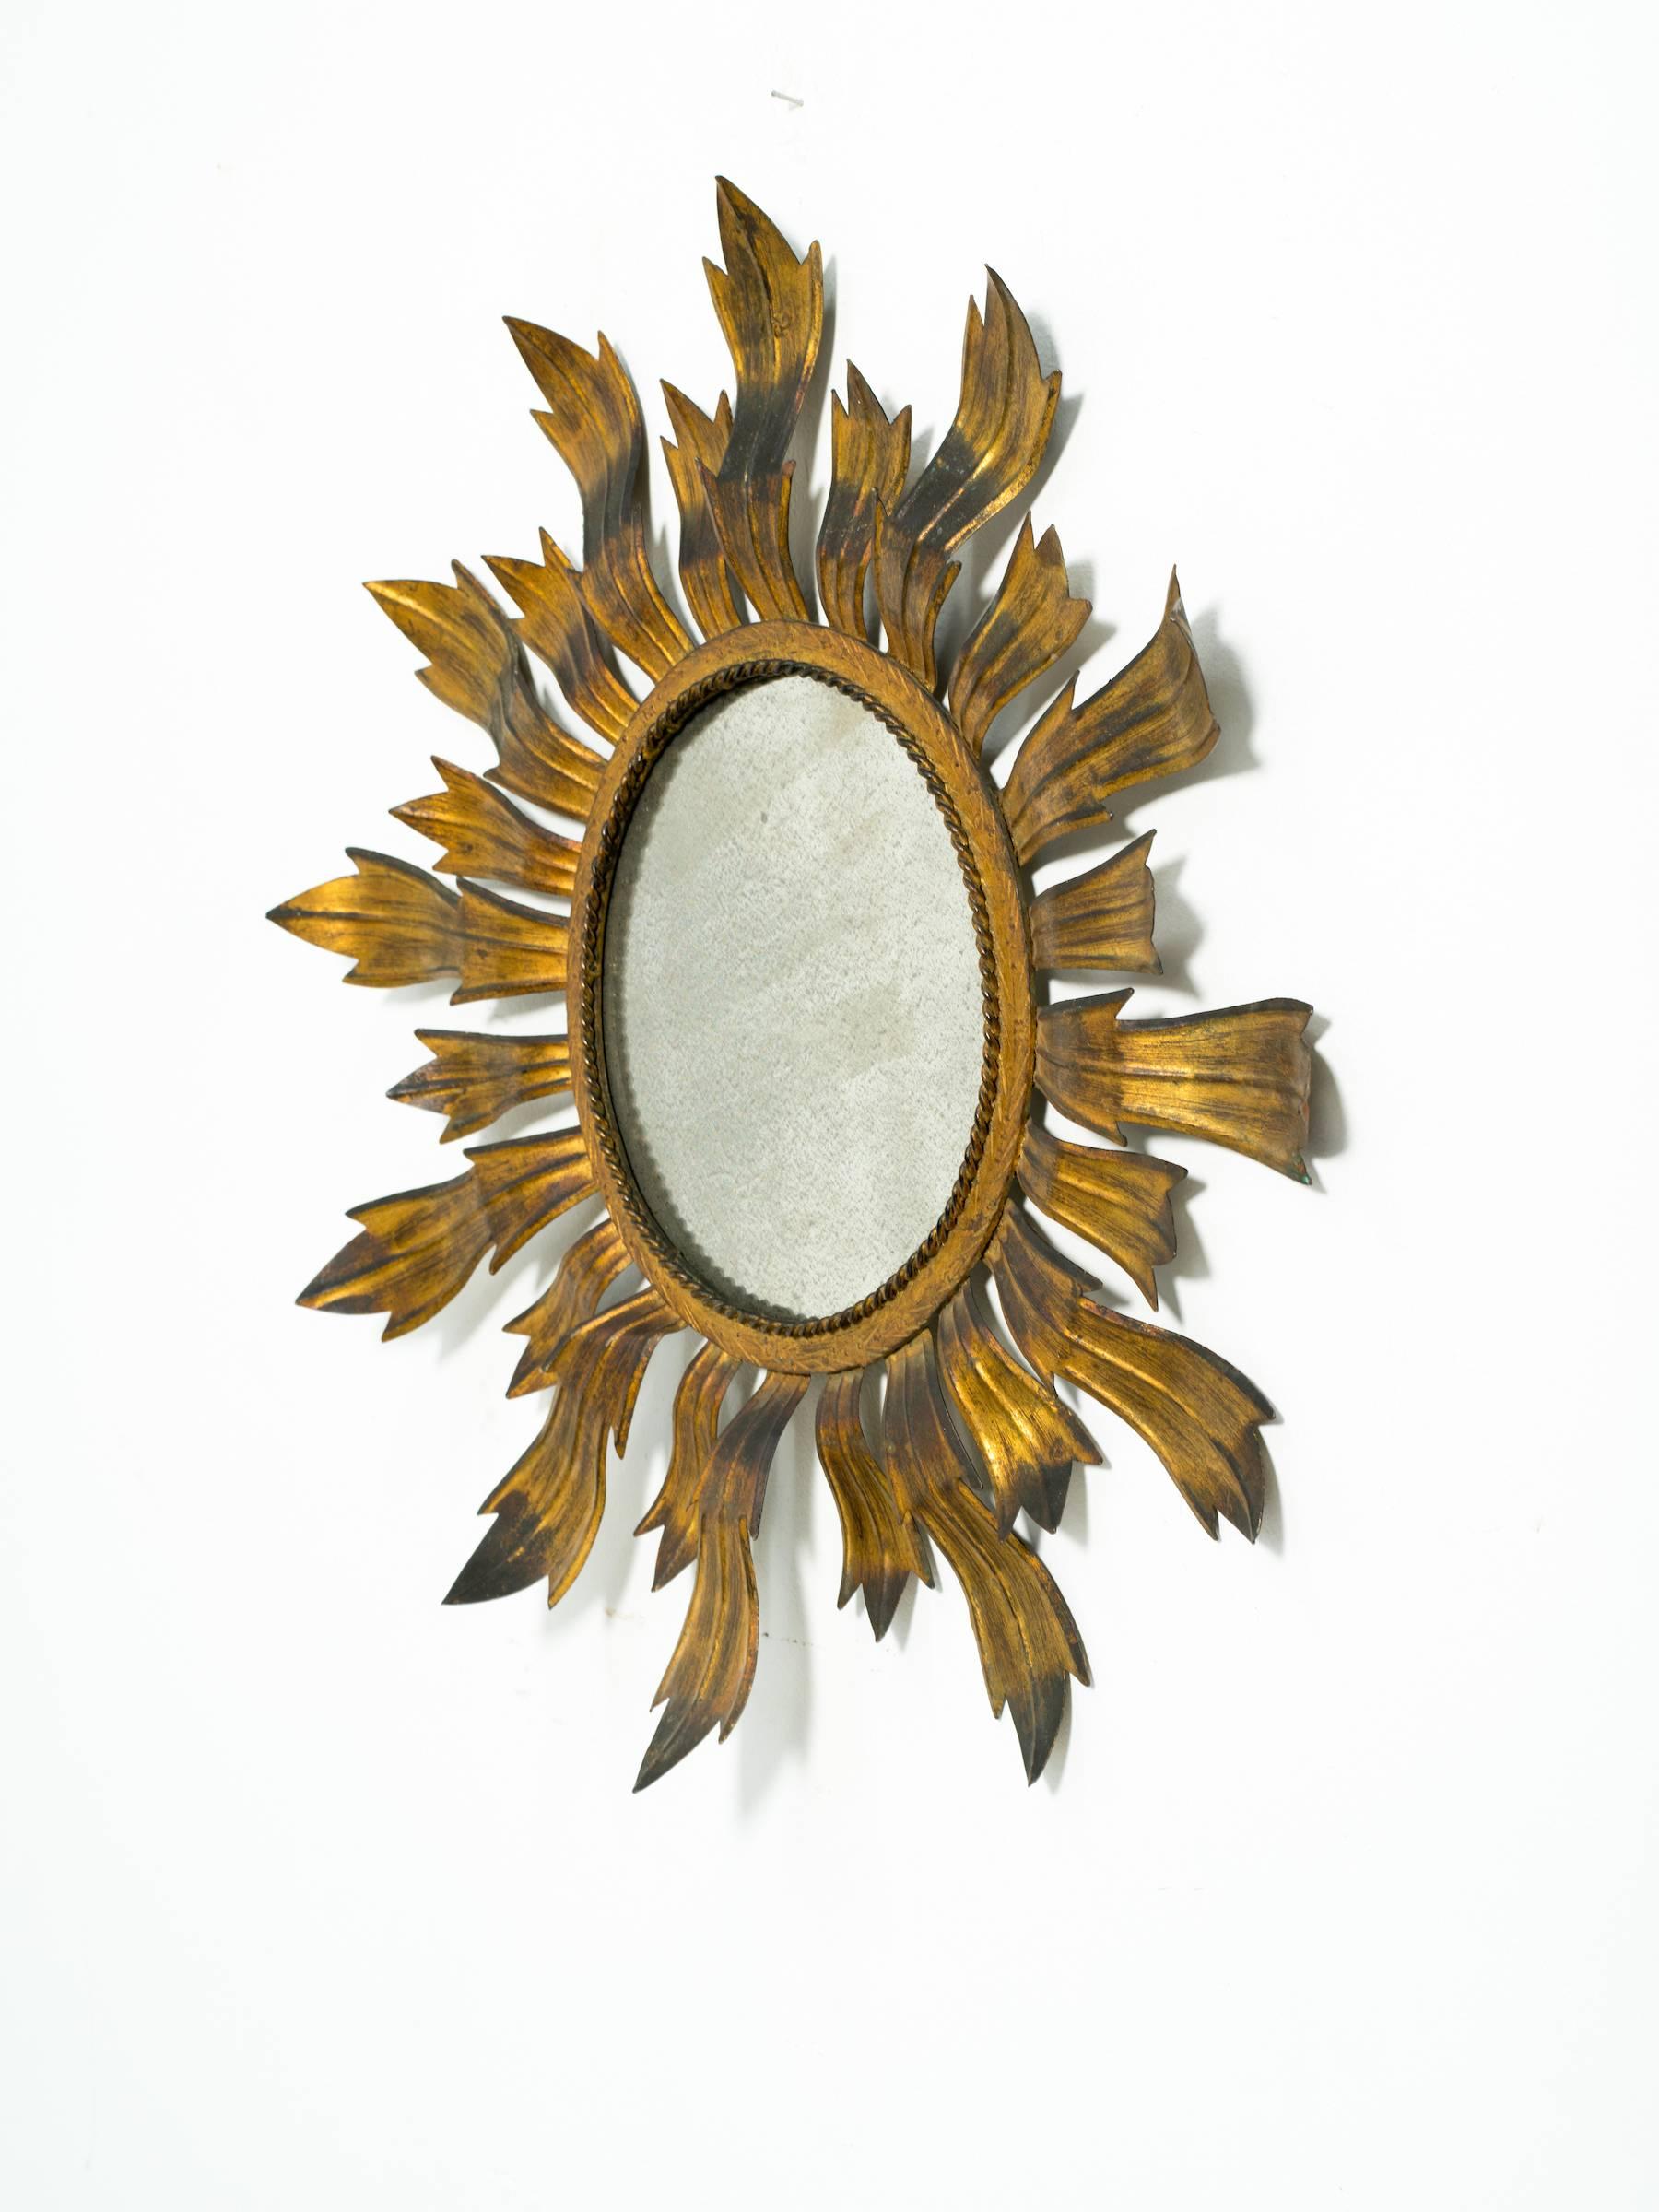 Gilt metal sunburst mirror with aged glass.